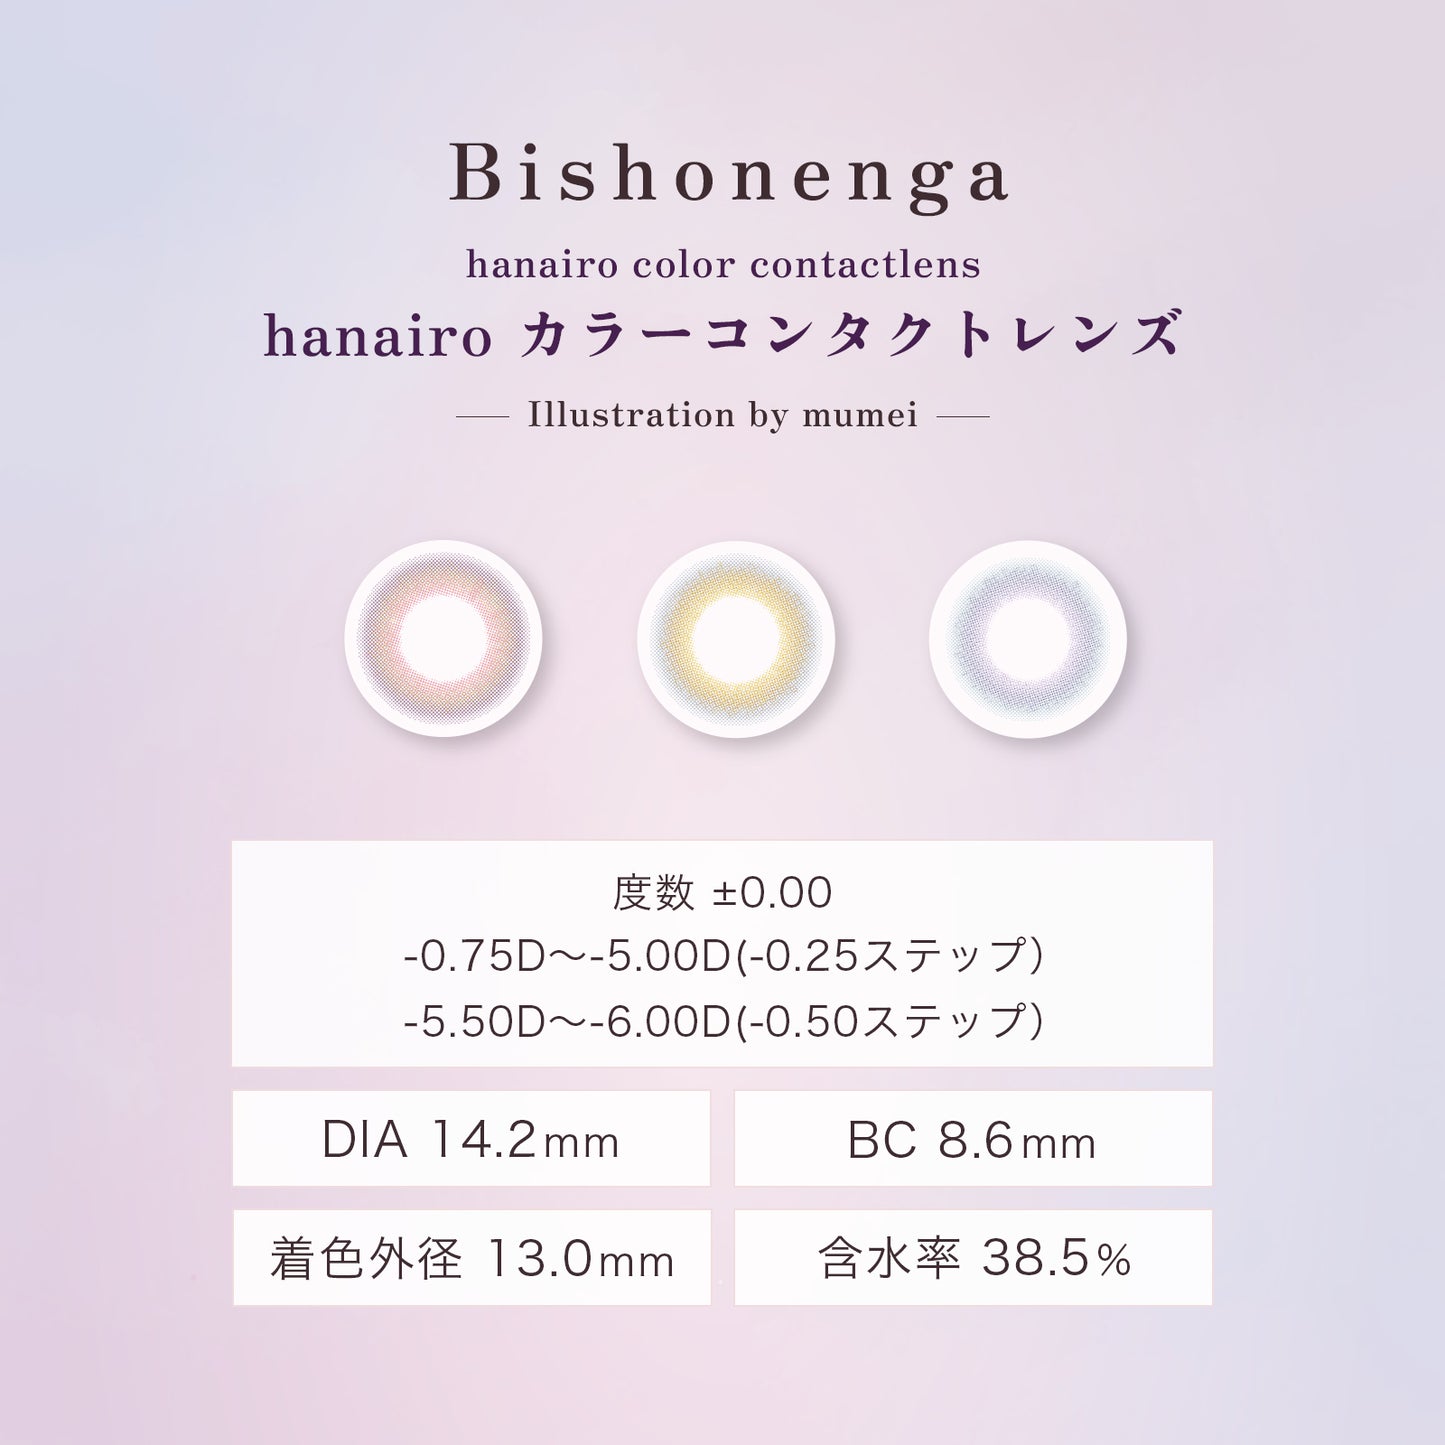 Bishonenga   hanairo カラーコンタクトレンズ  Illustration by mumei  金木犀 kinmokusei